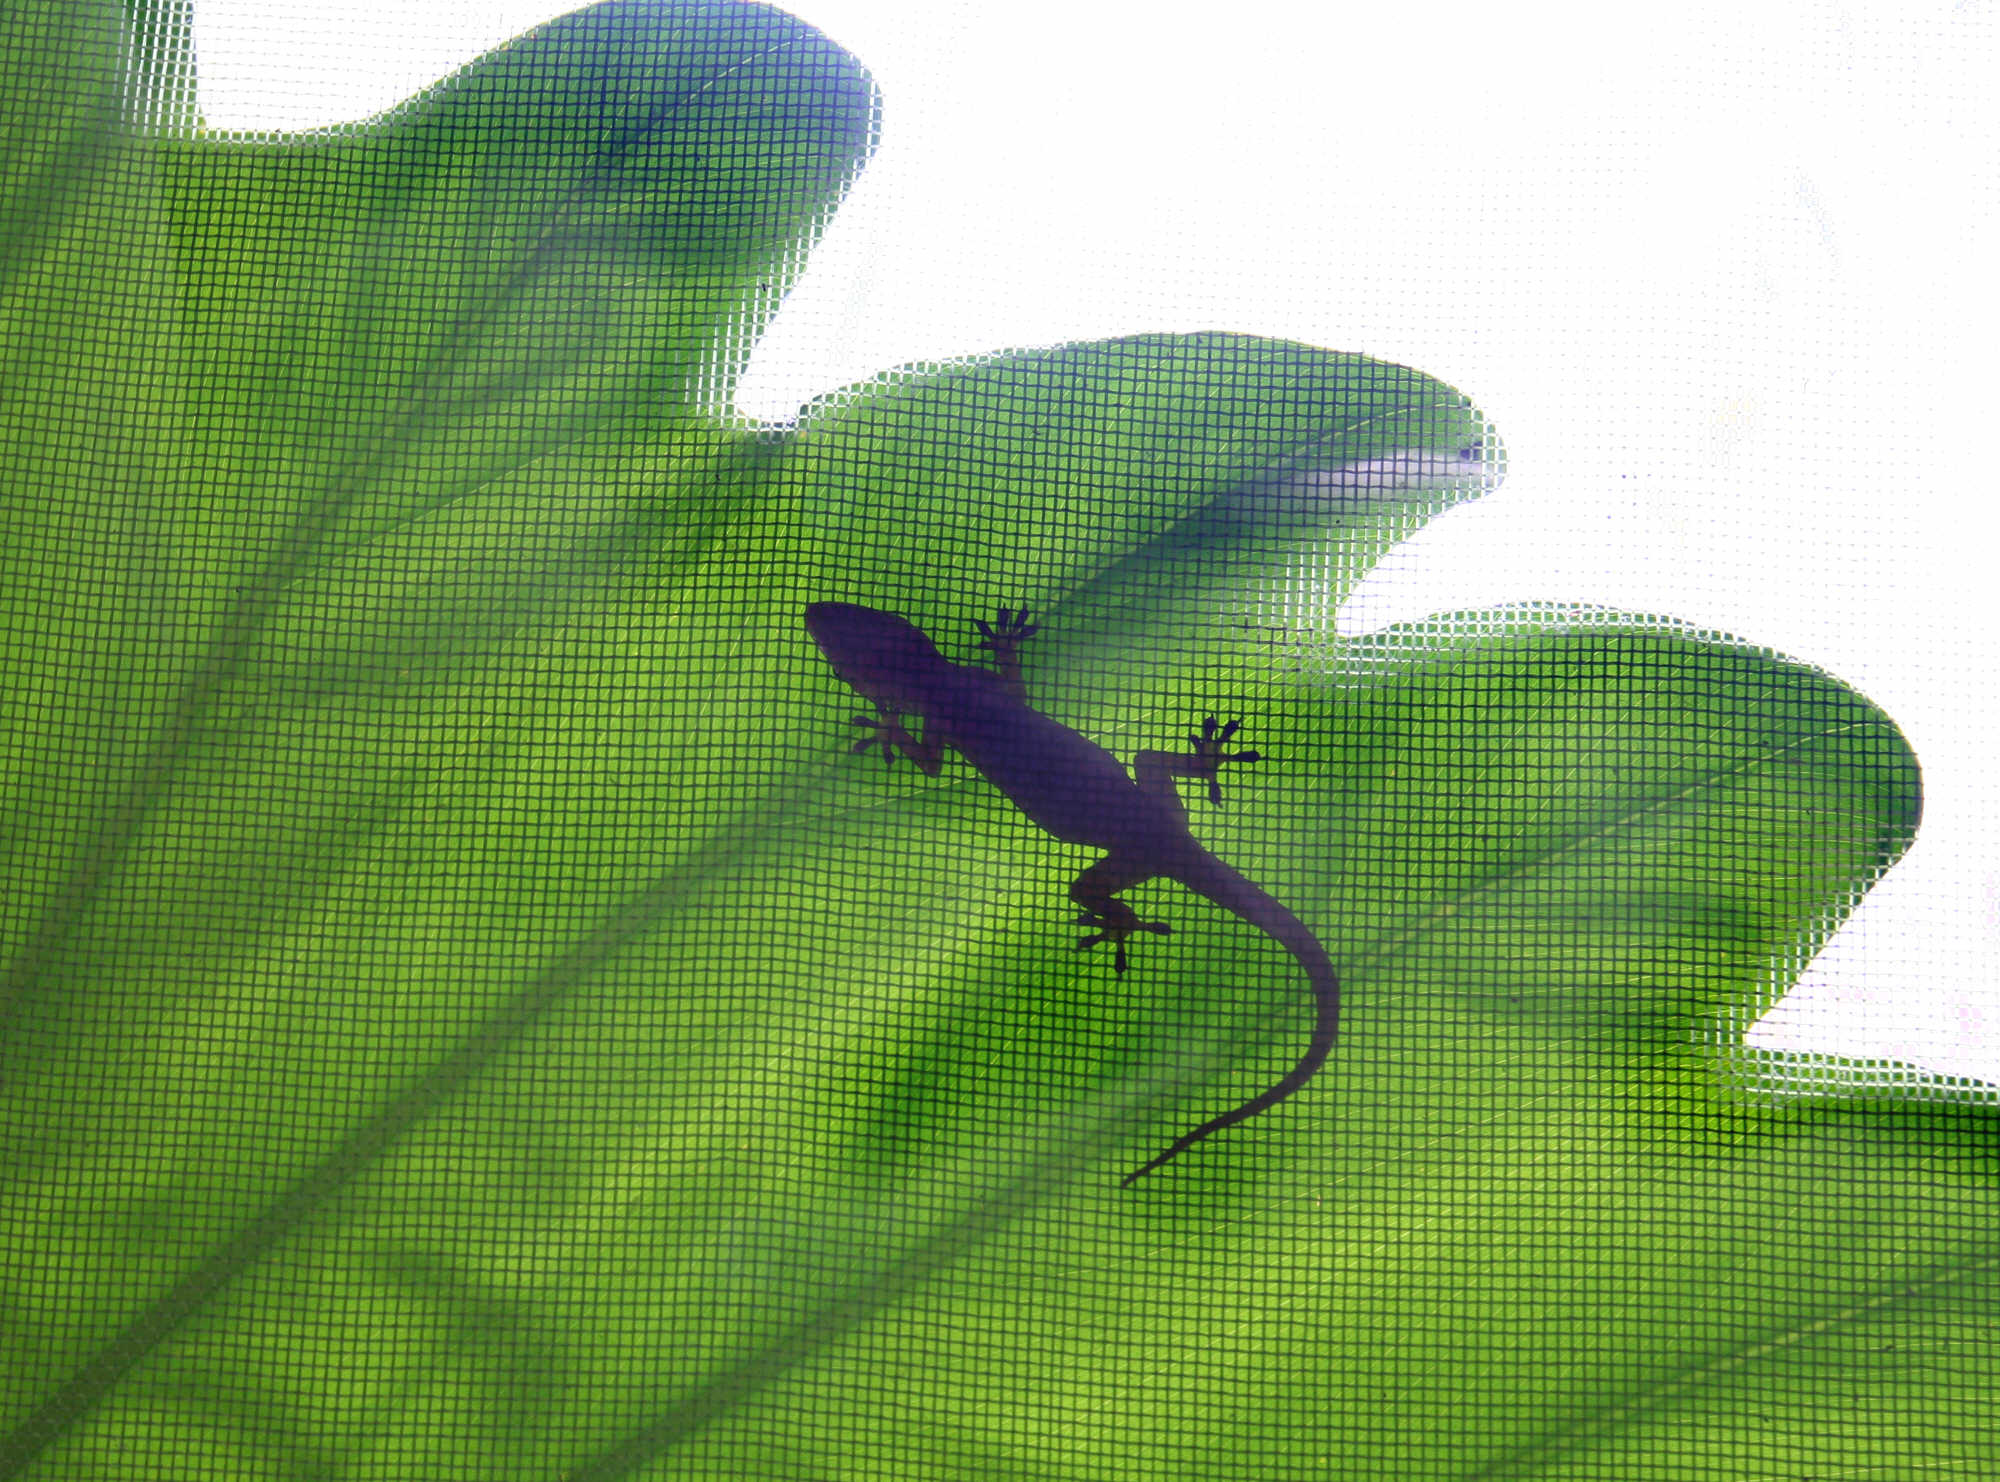 [Image of gecko]